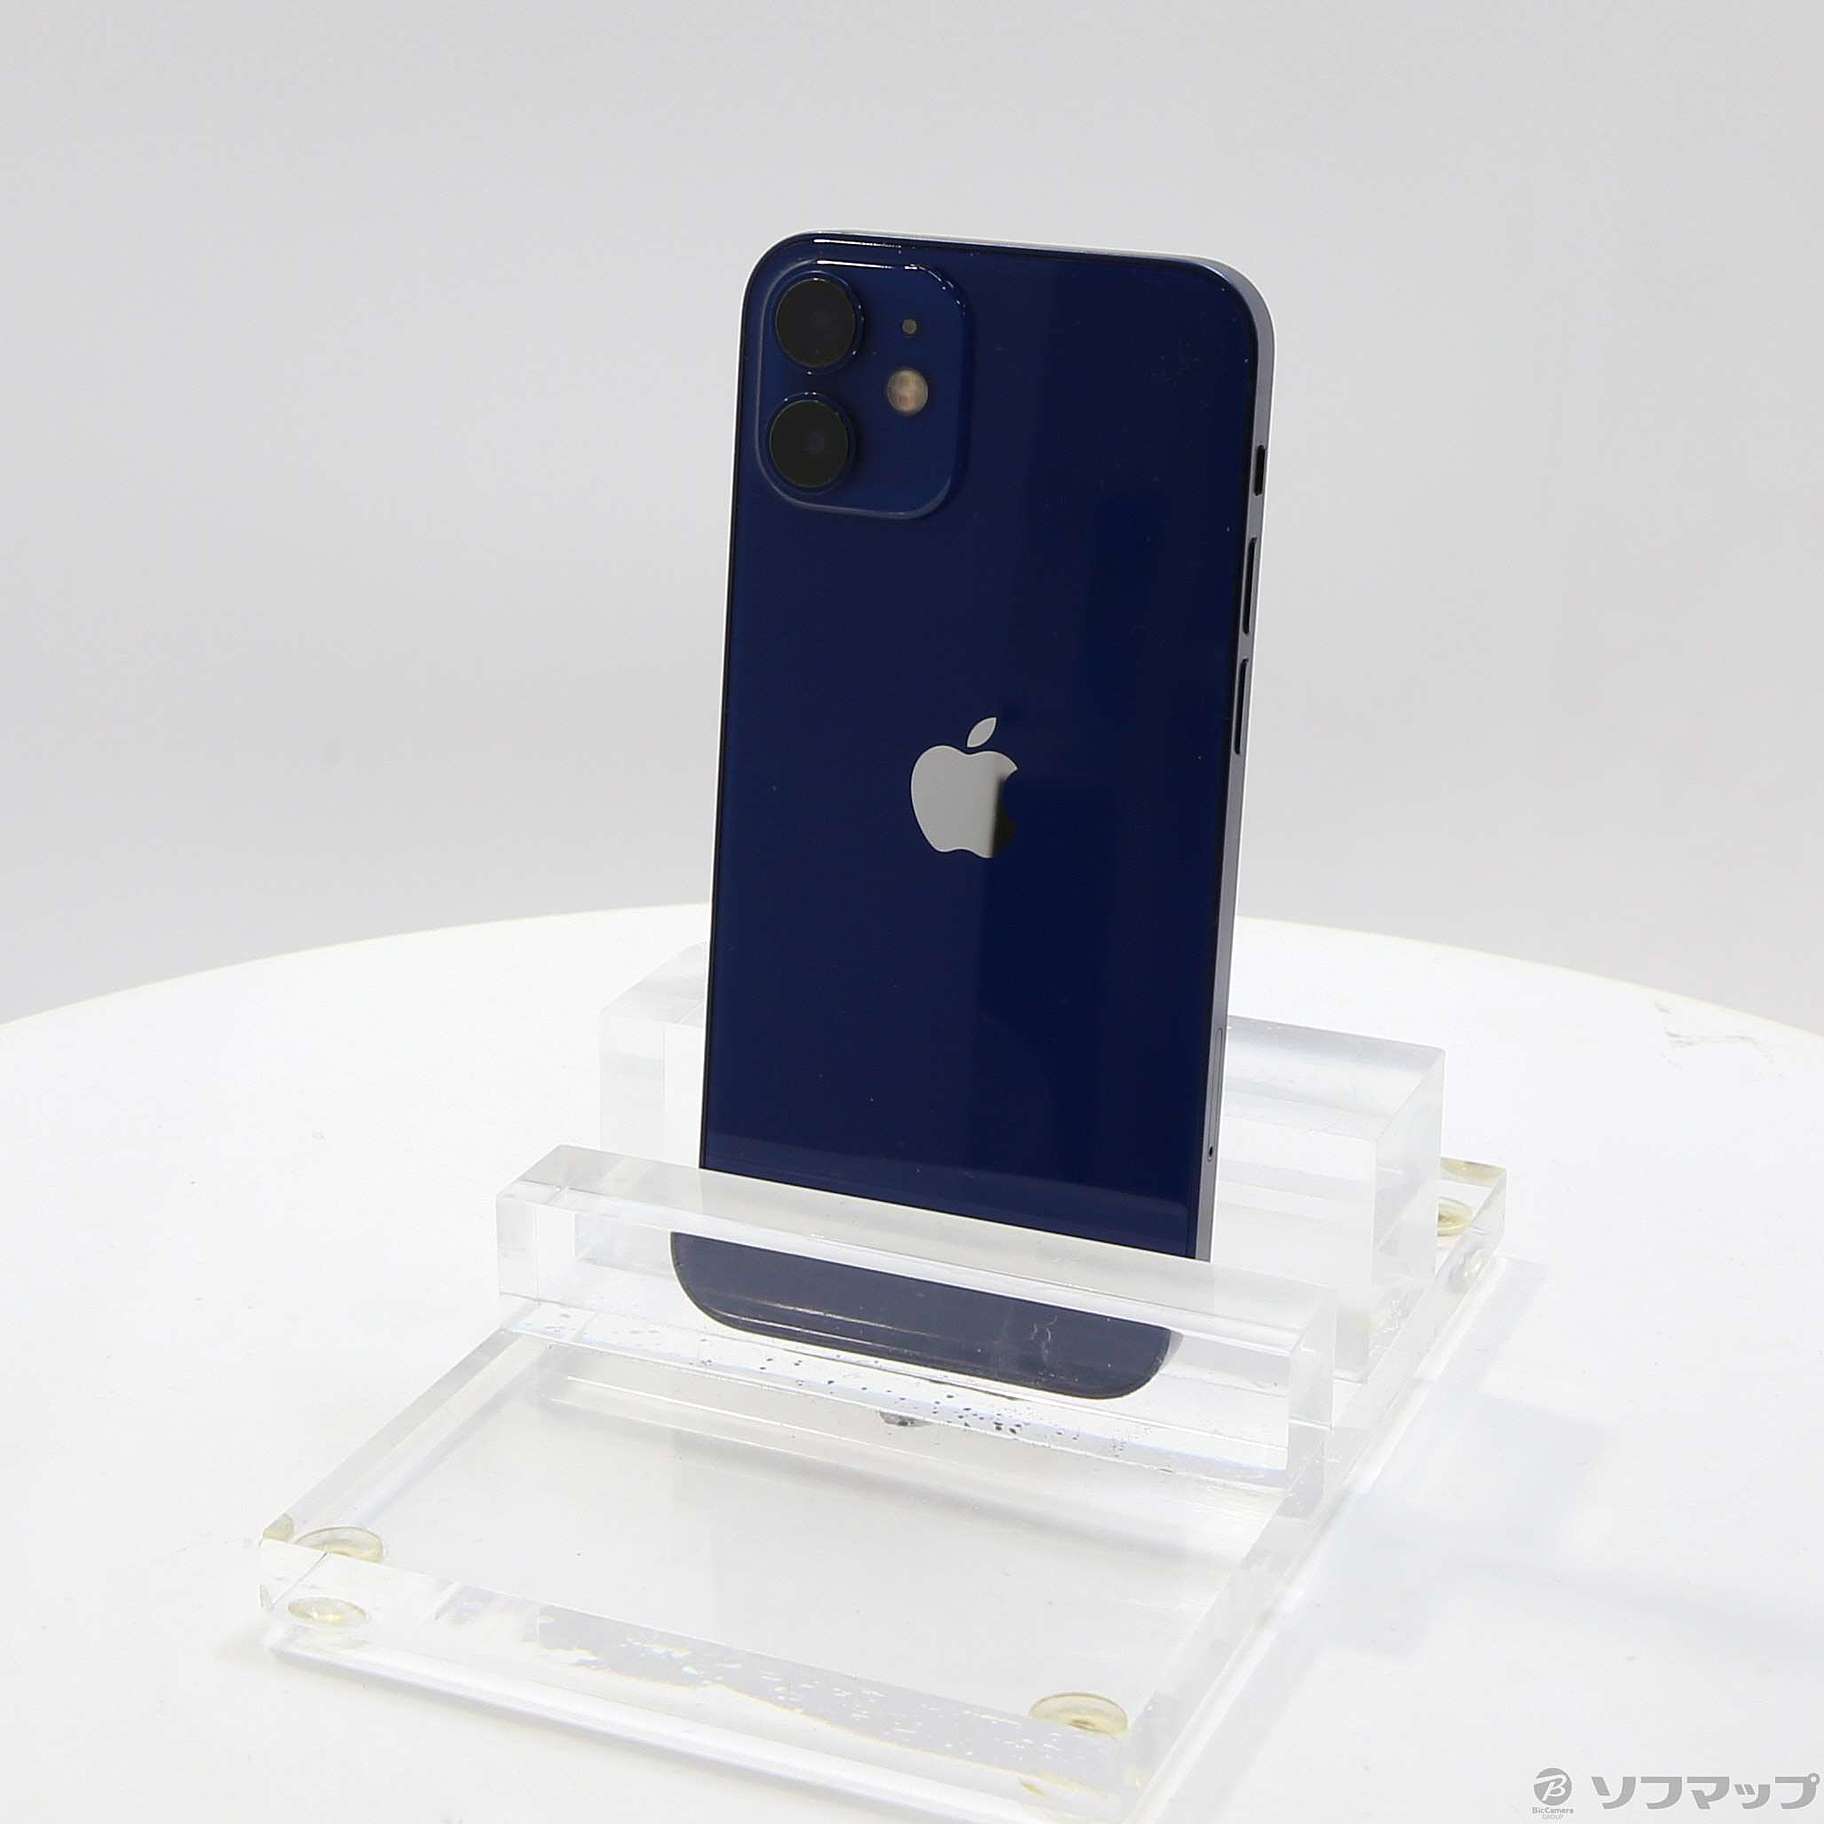 iPhone 12 mini 64GB 青 ブルー Blue - construramaragon.com